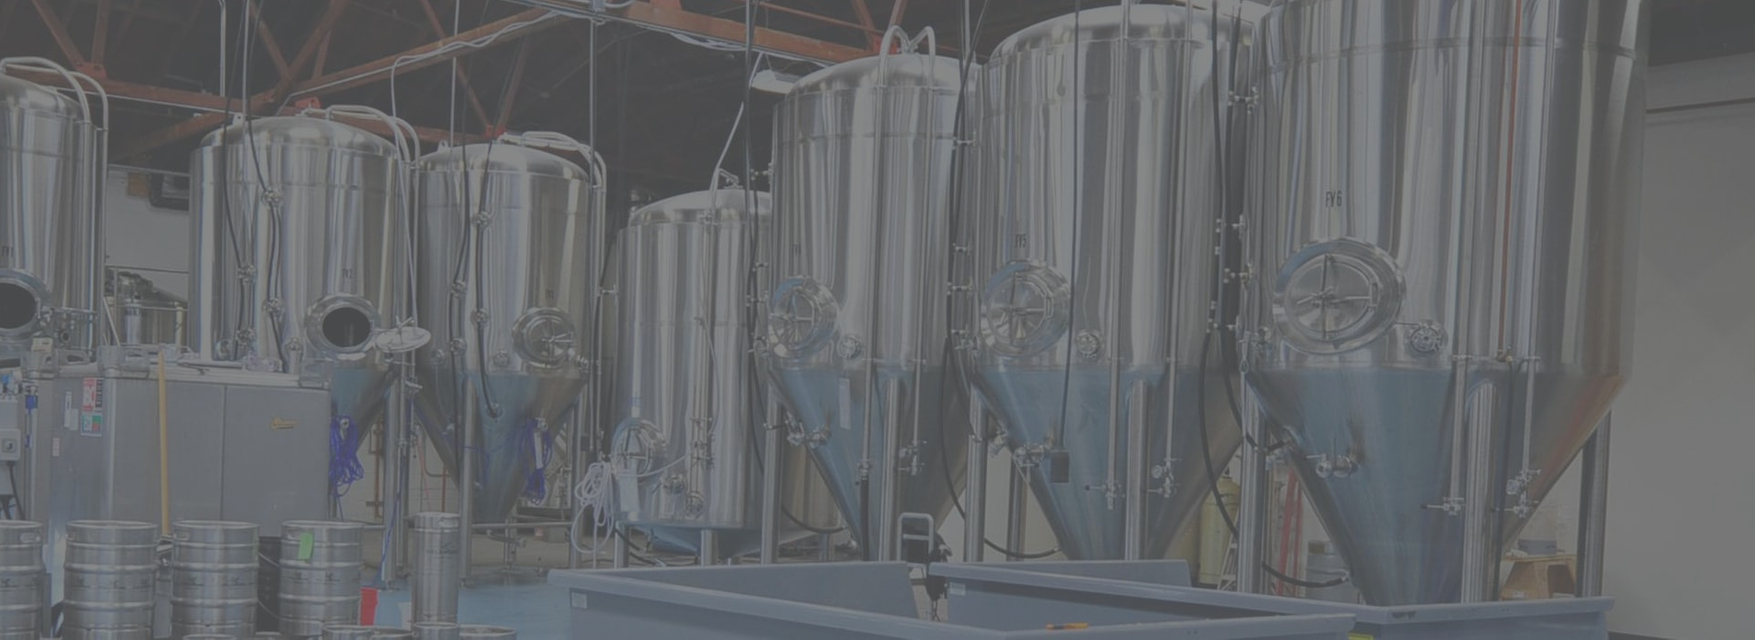 Brewery Equipment Manufacturer